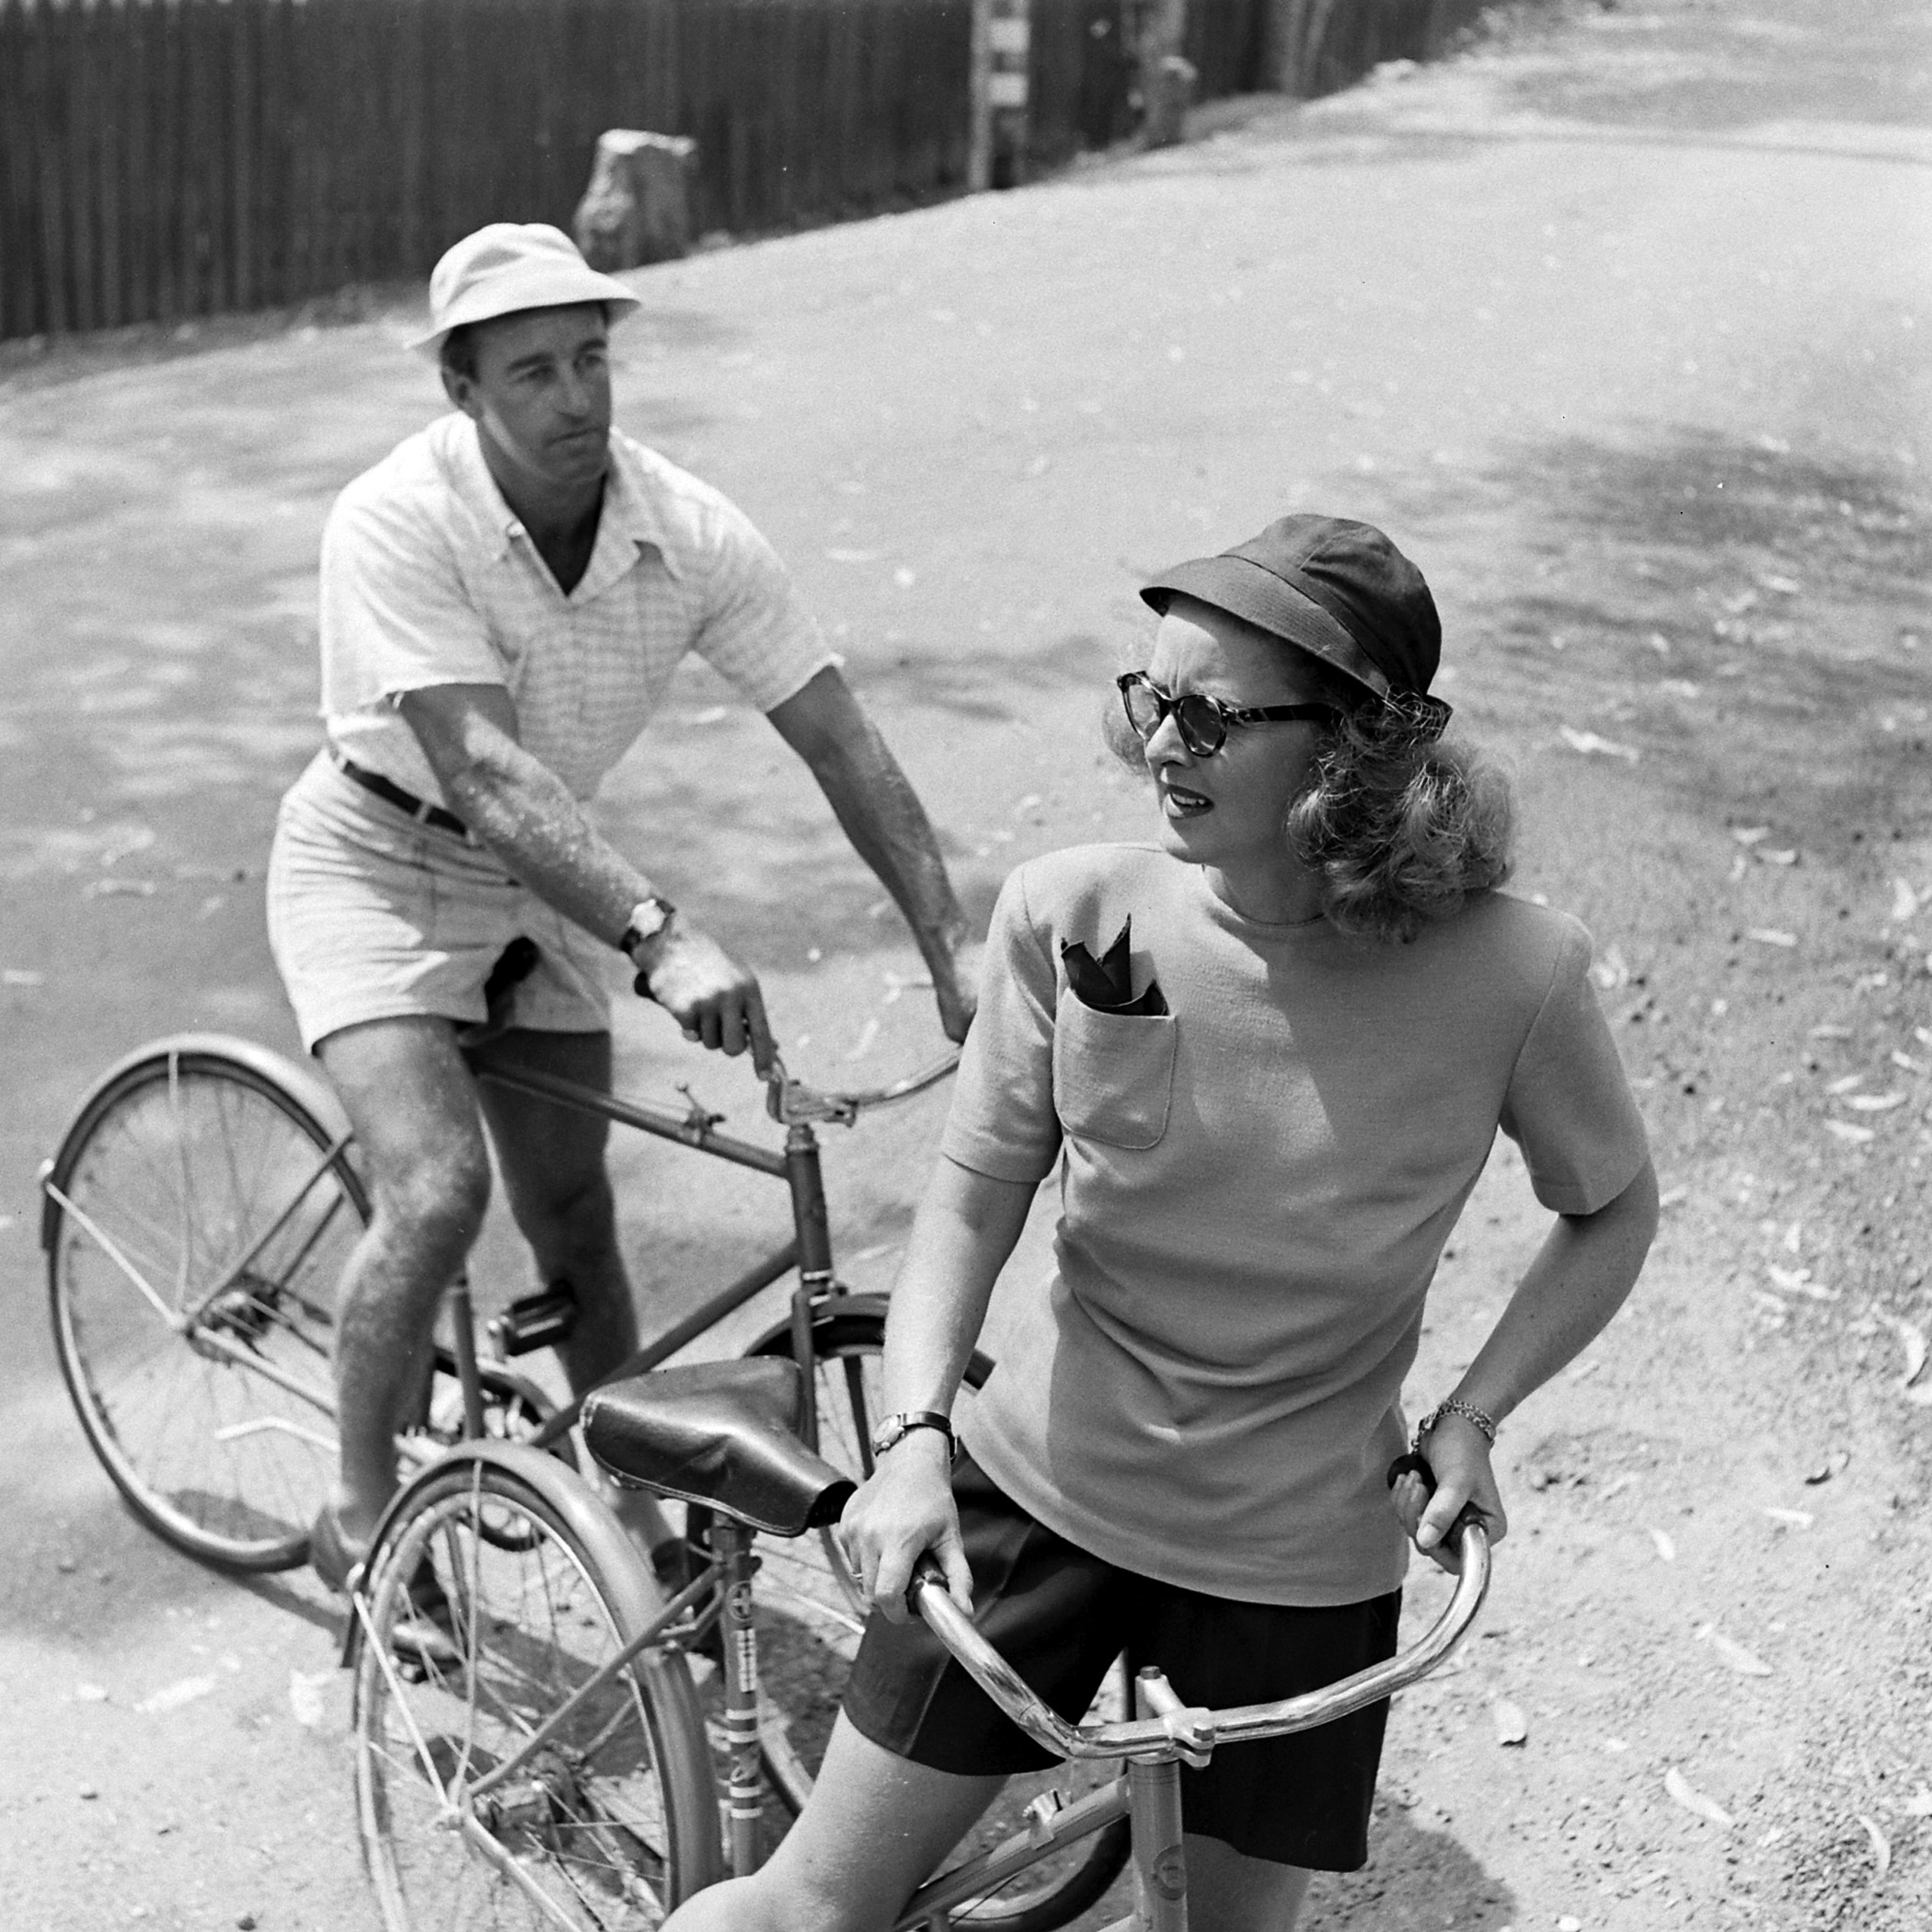 Bette Davis and her third husband William Grant Sherry bike riding in California, 1947.